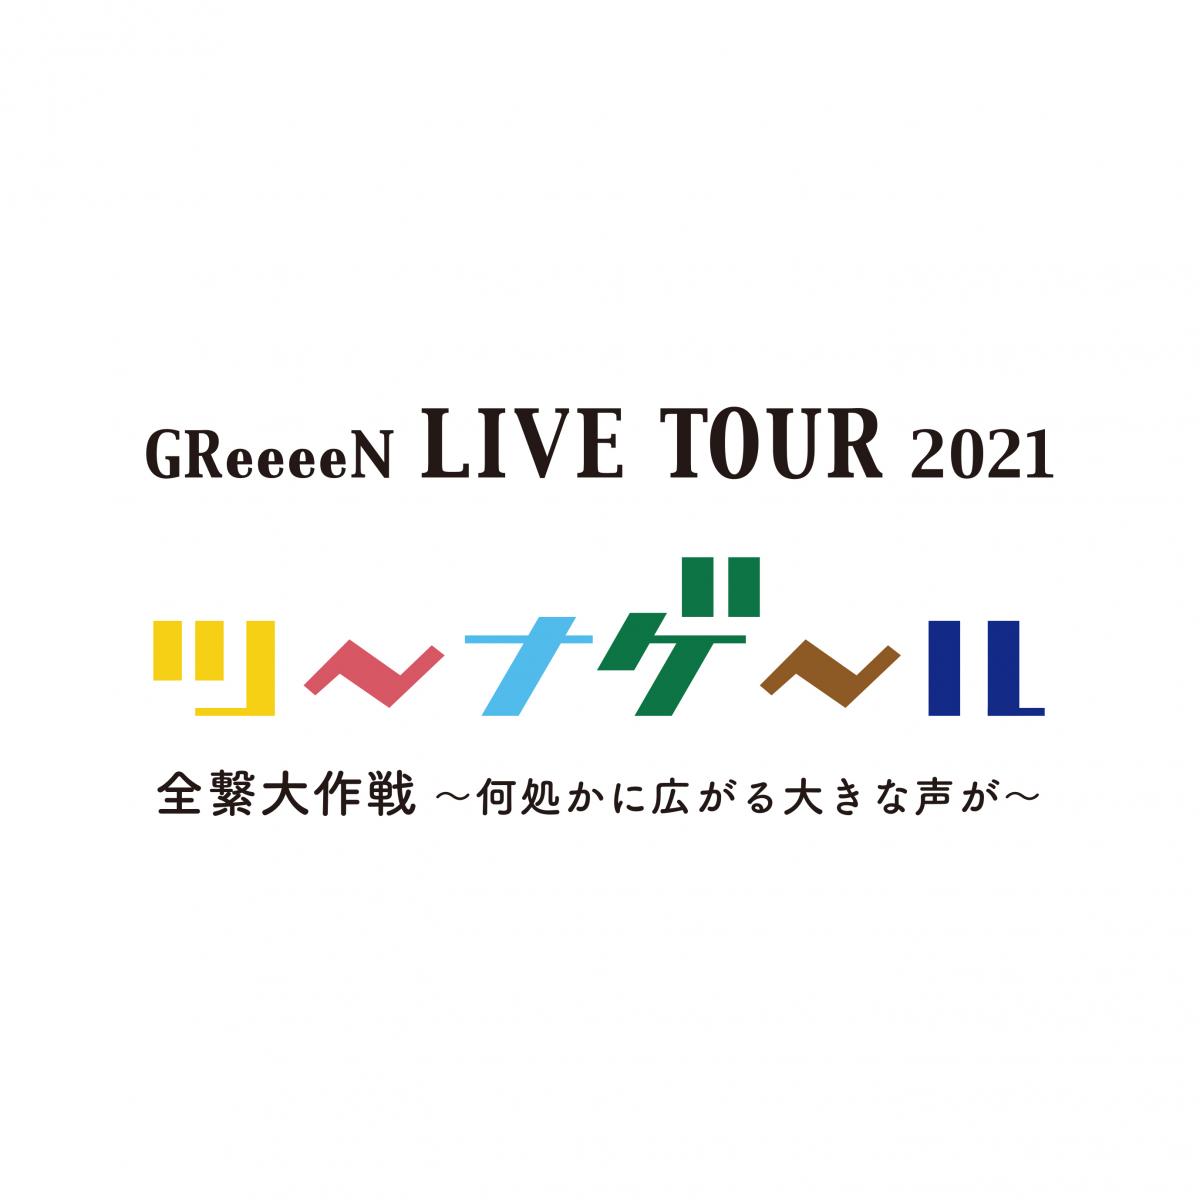 GReeeeN LIVE TOUR 2021
「ツーナゲール 全繋大作戦 〜何処かに広がる大きな声が〜」